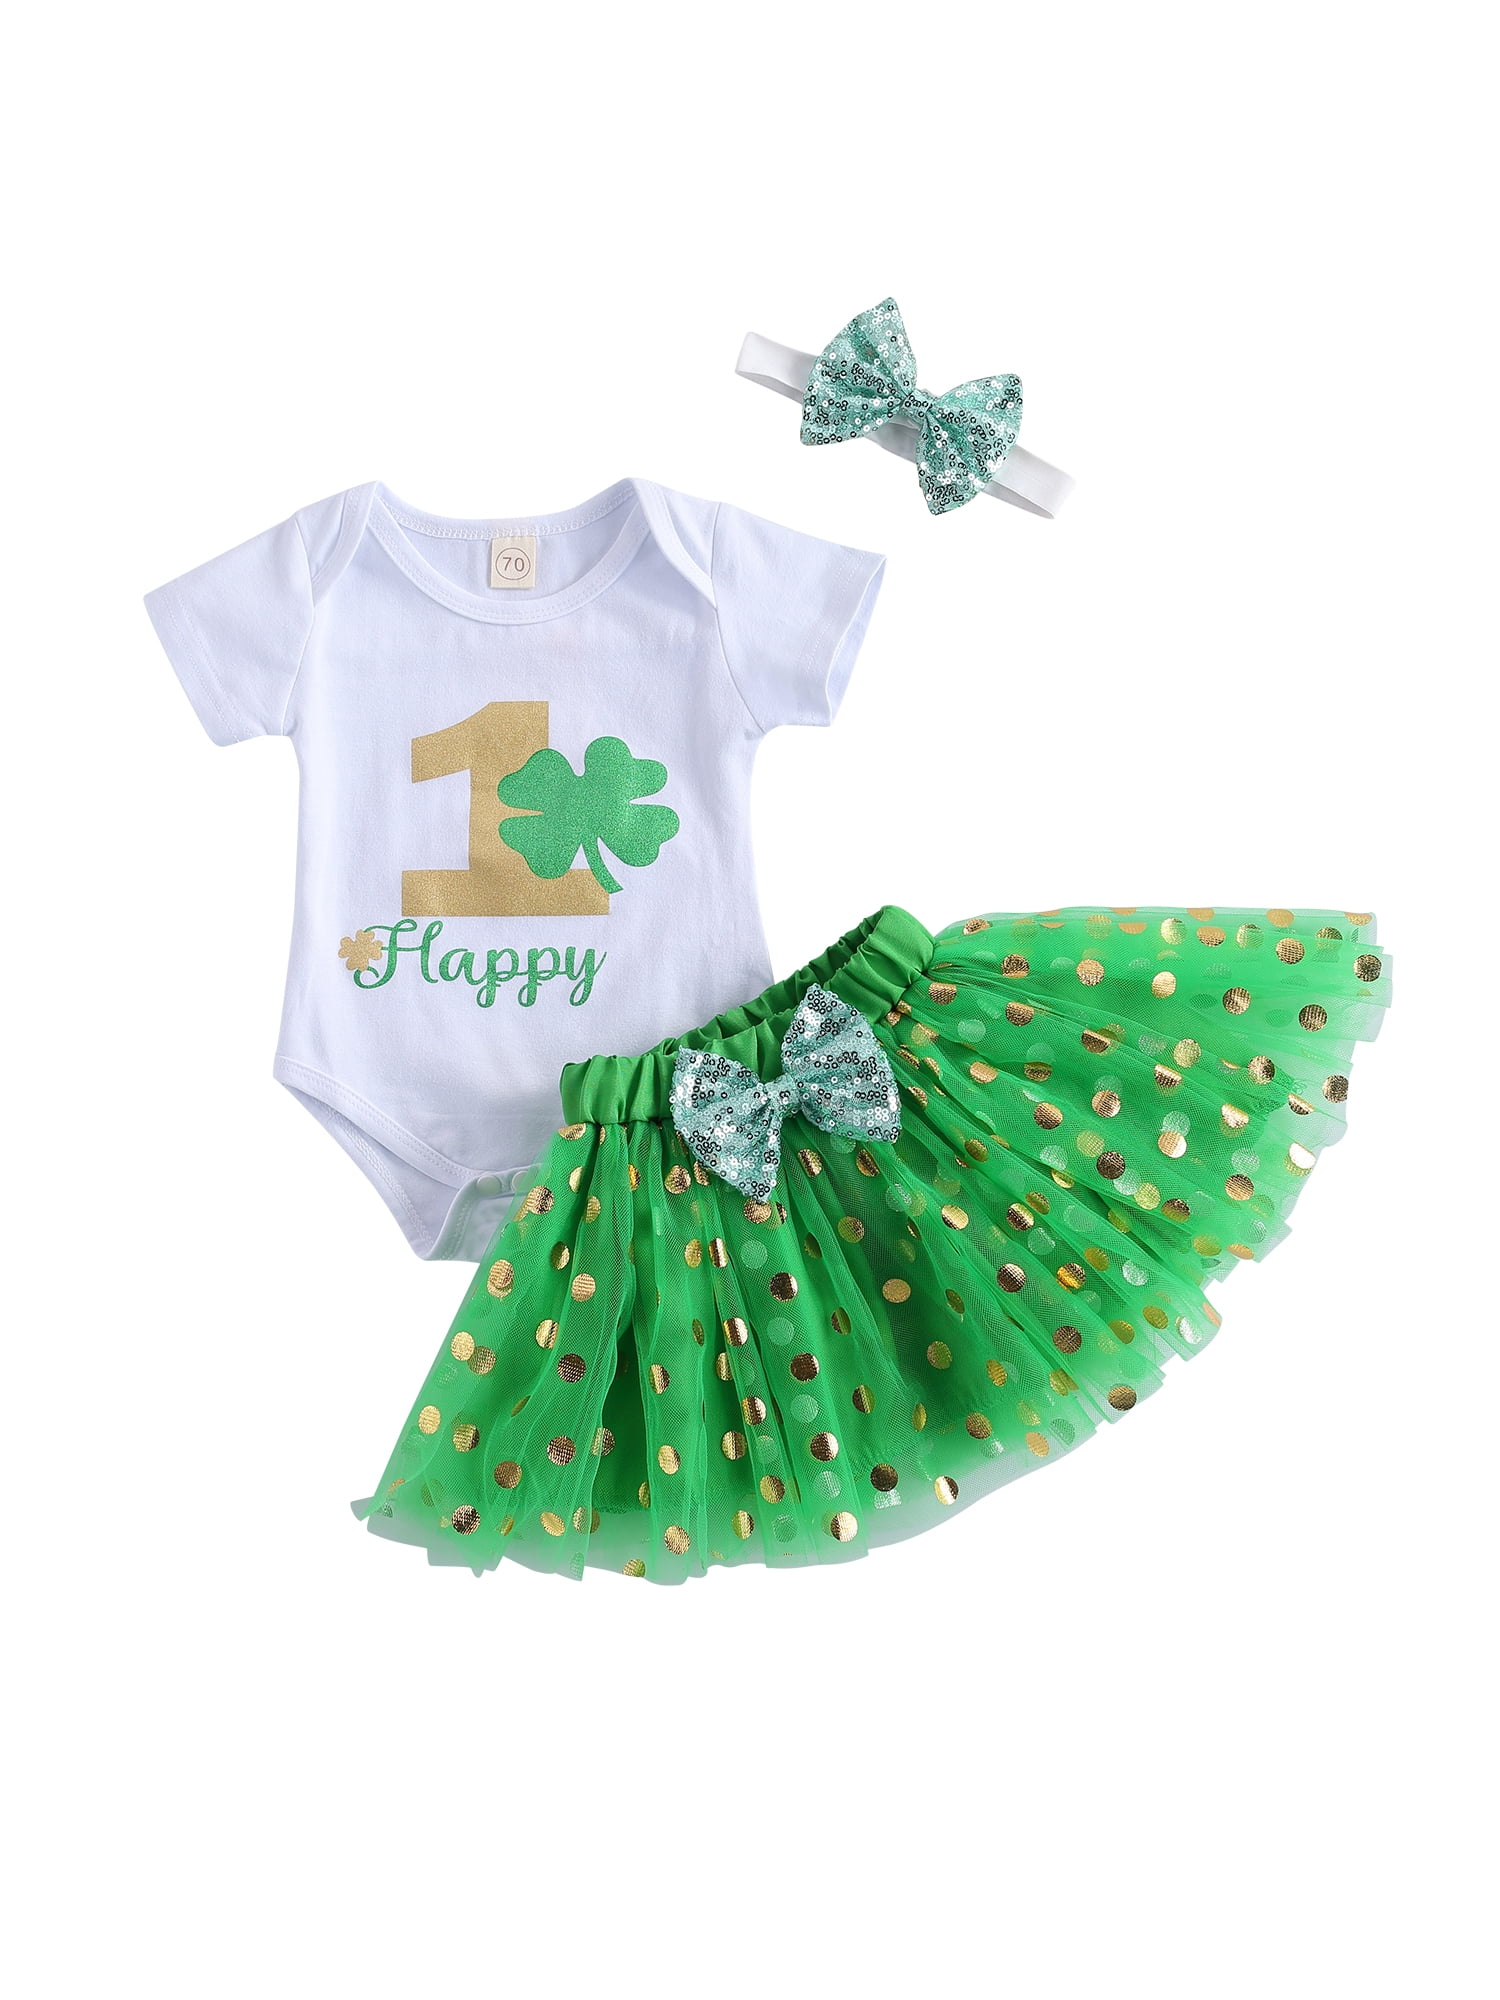 Honganda 3Pcs/Set Newborn Infant Baby Girl Hello World Romper+Tutu Shorts+Headband Outfit